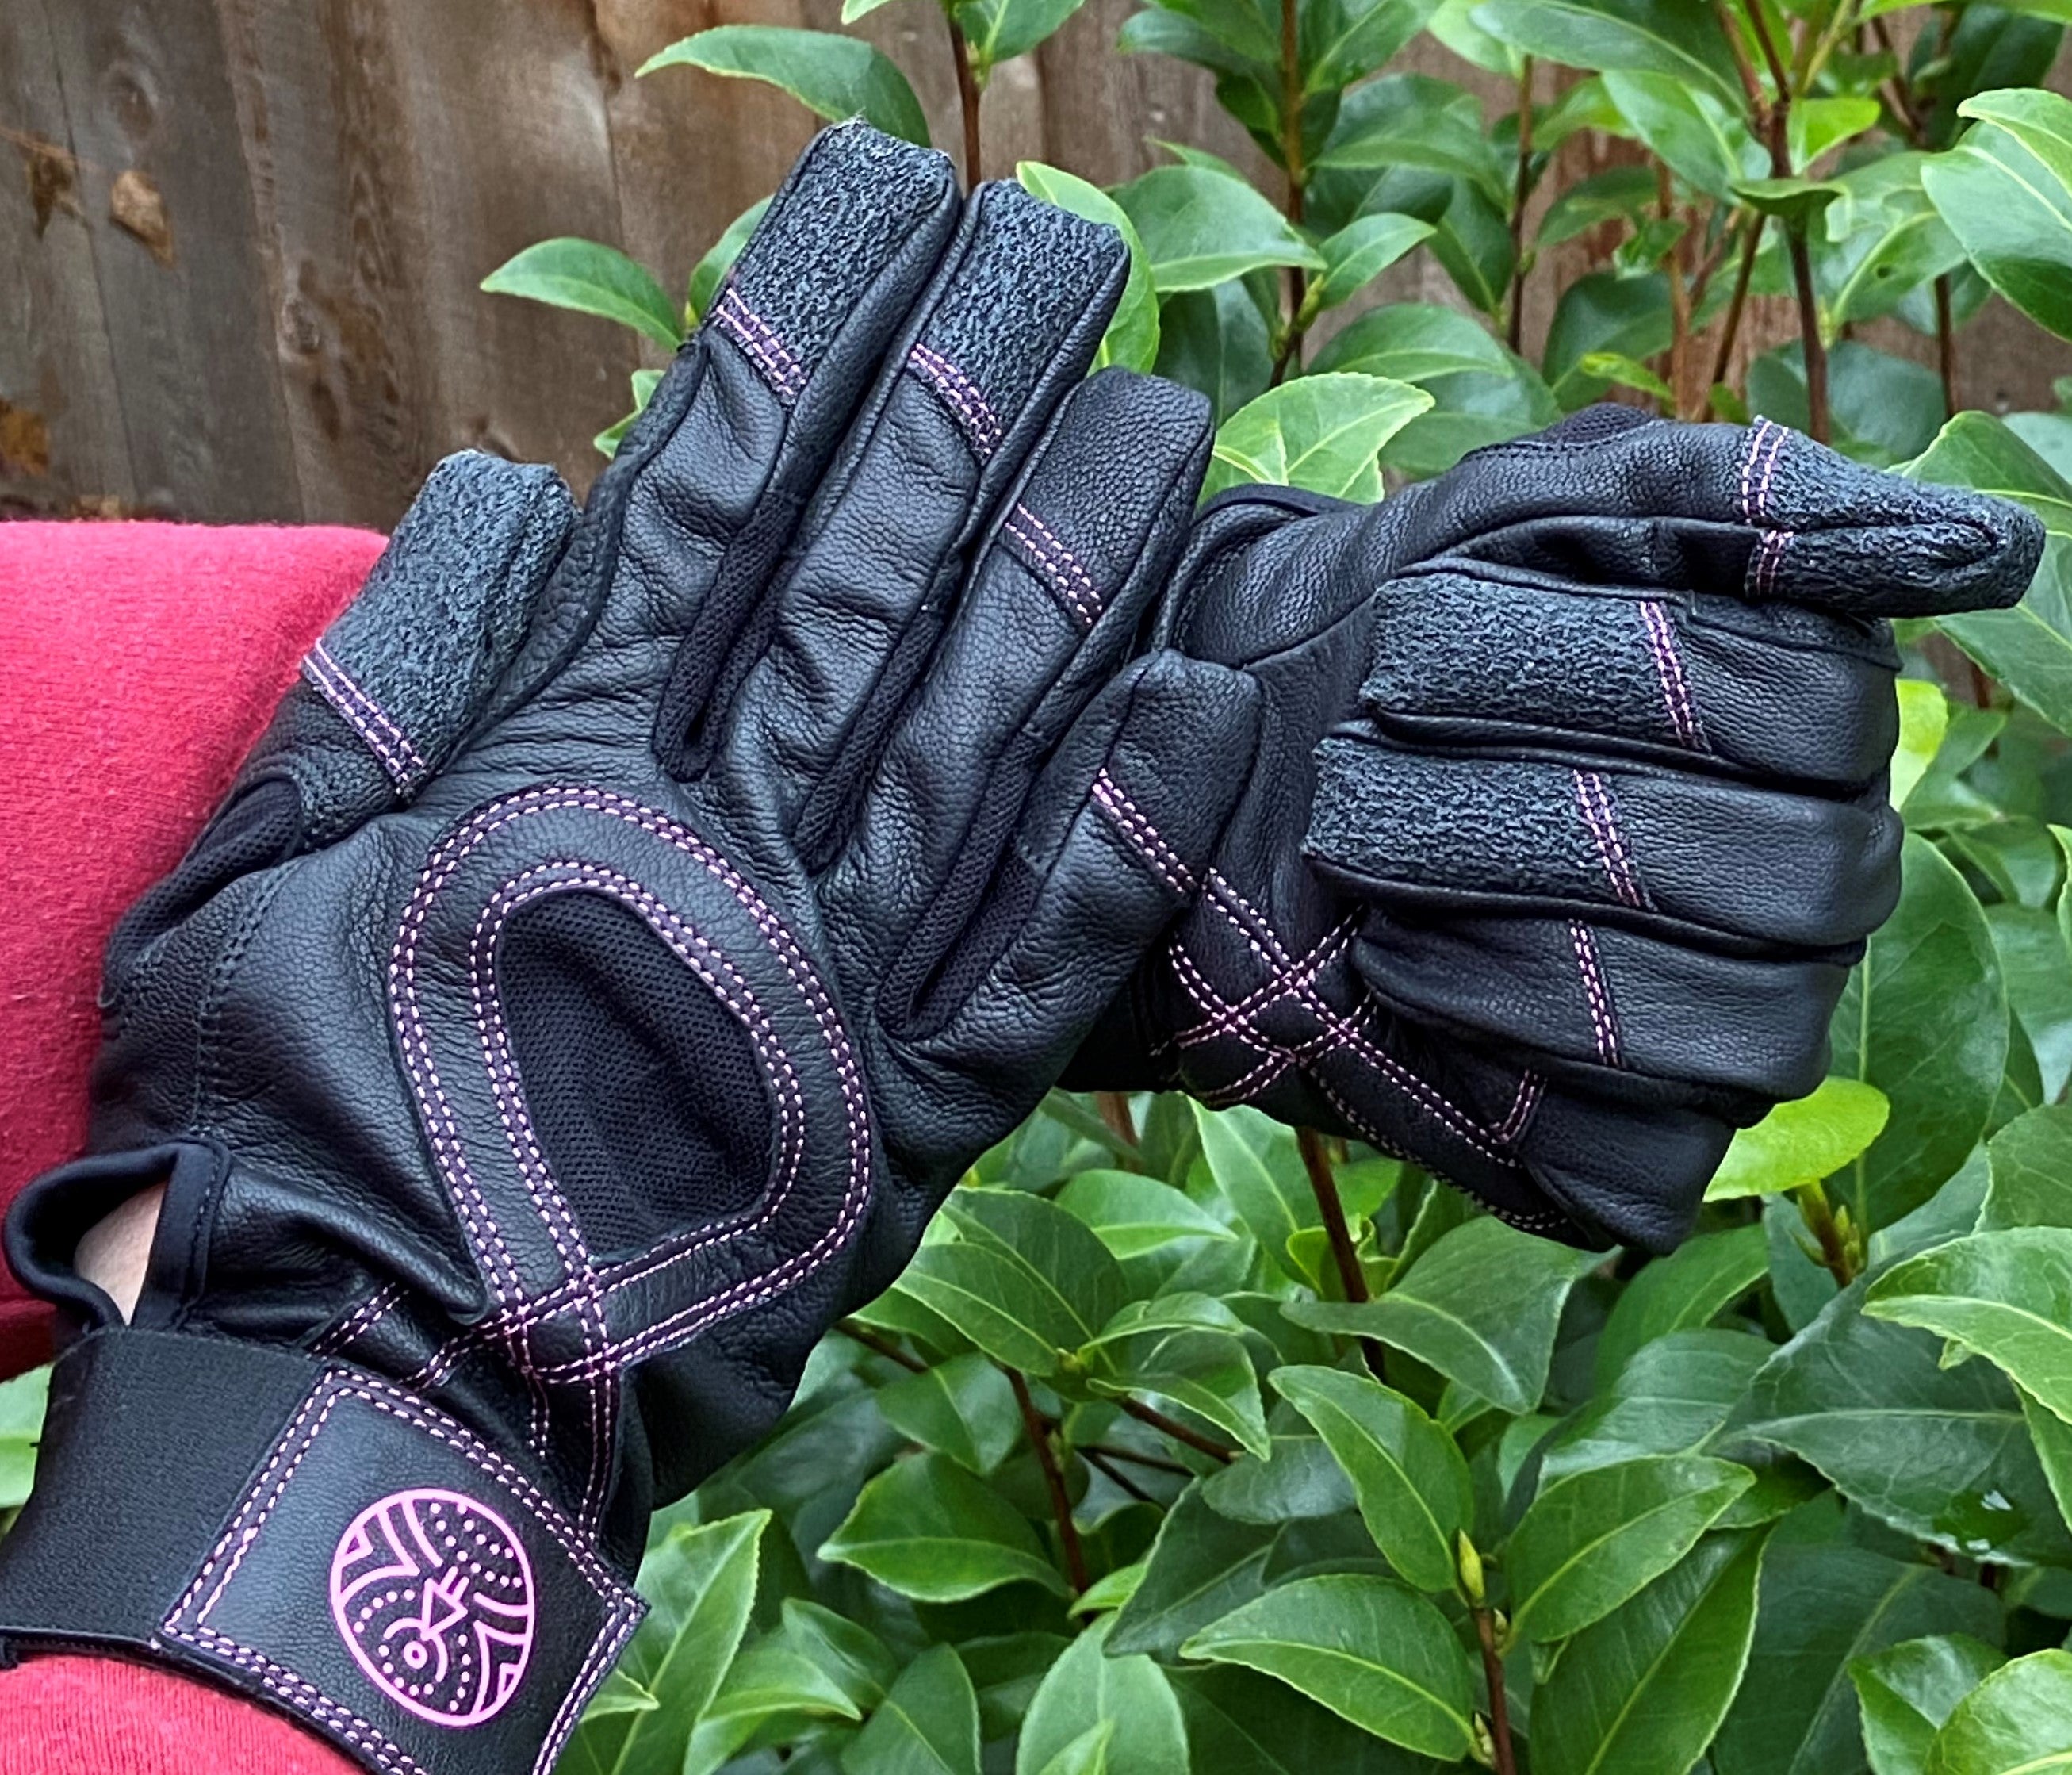 women's gardening gloves, natural leather, thorn proof, recycled materials, adjustable wrist strap, KEVLAR reinforced fingertips, protect fingernails